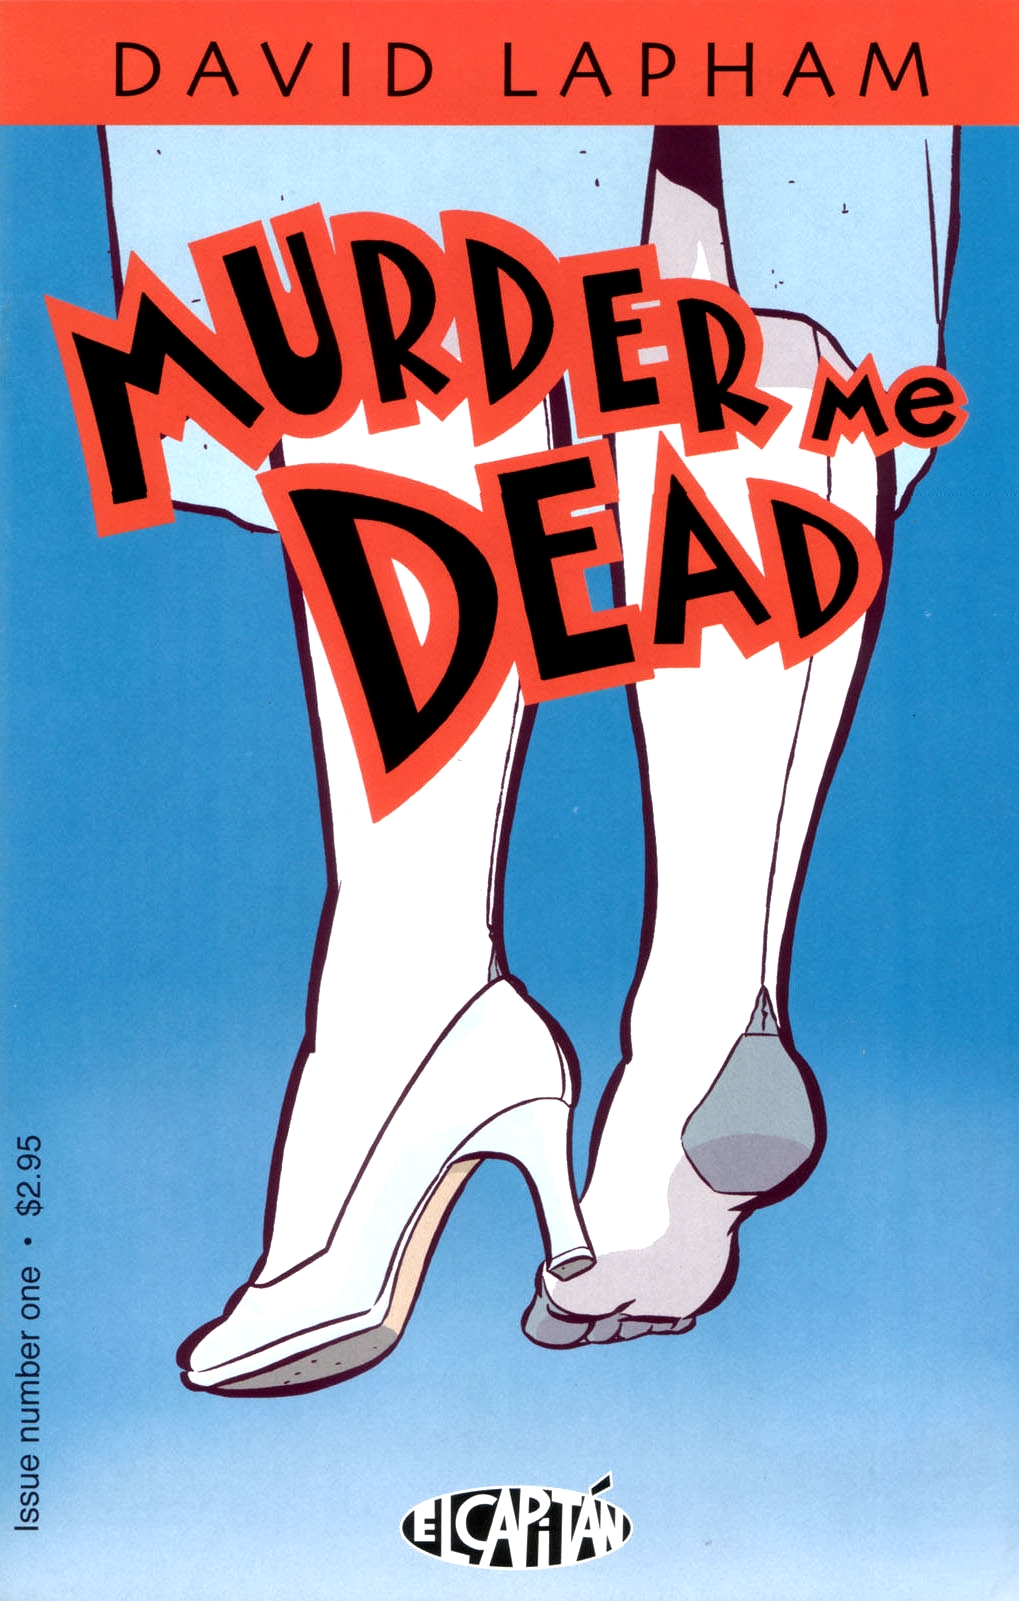 Read online Murder Me Dead comic -  Issue #1 - 1